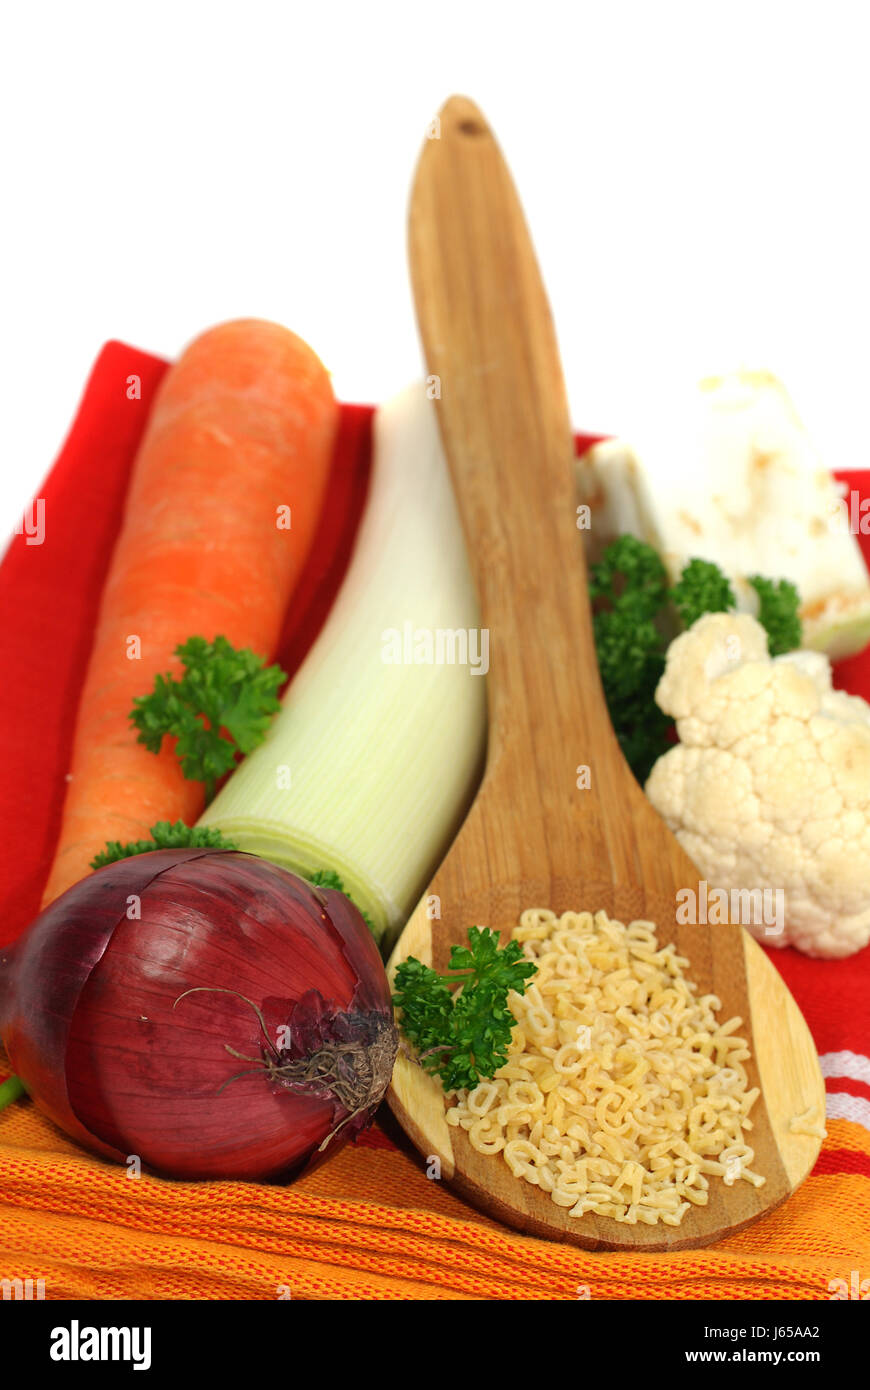 Ingredienti vegetali verdi deposito bollire cuochi cottura per bollitura materie vegetali Foto Stock